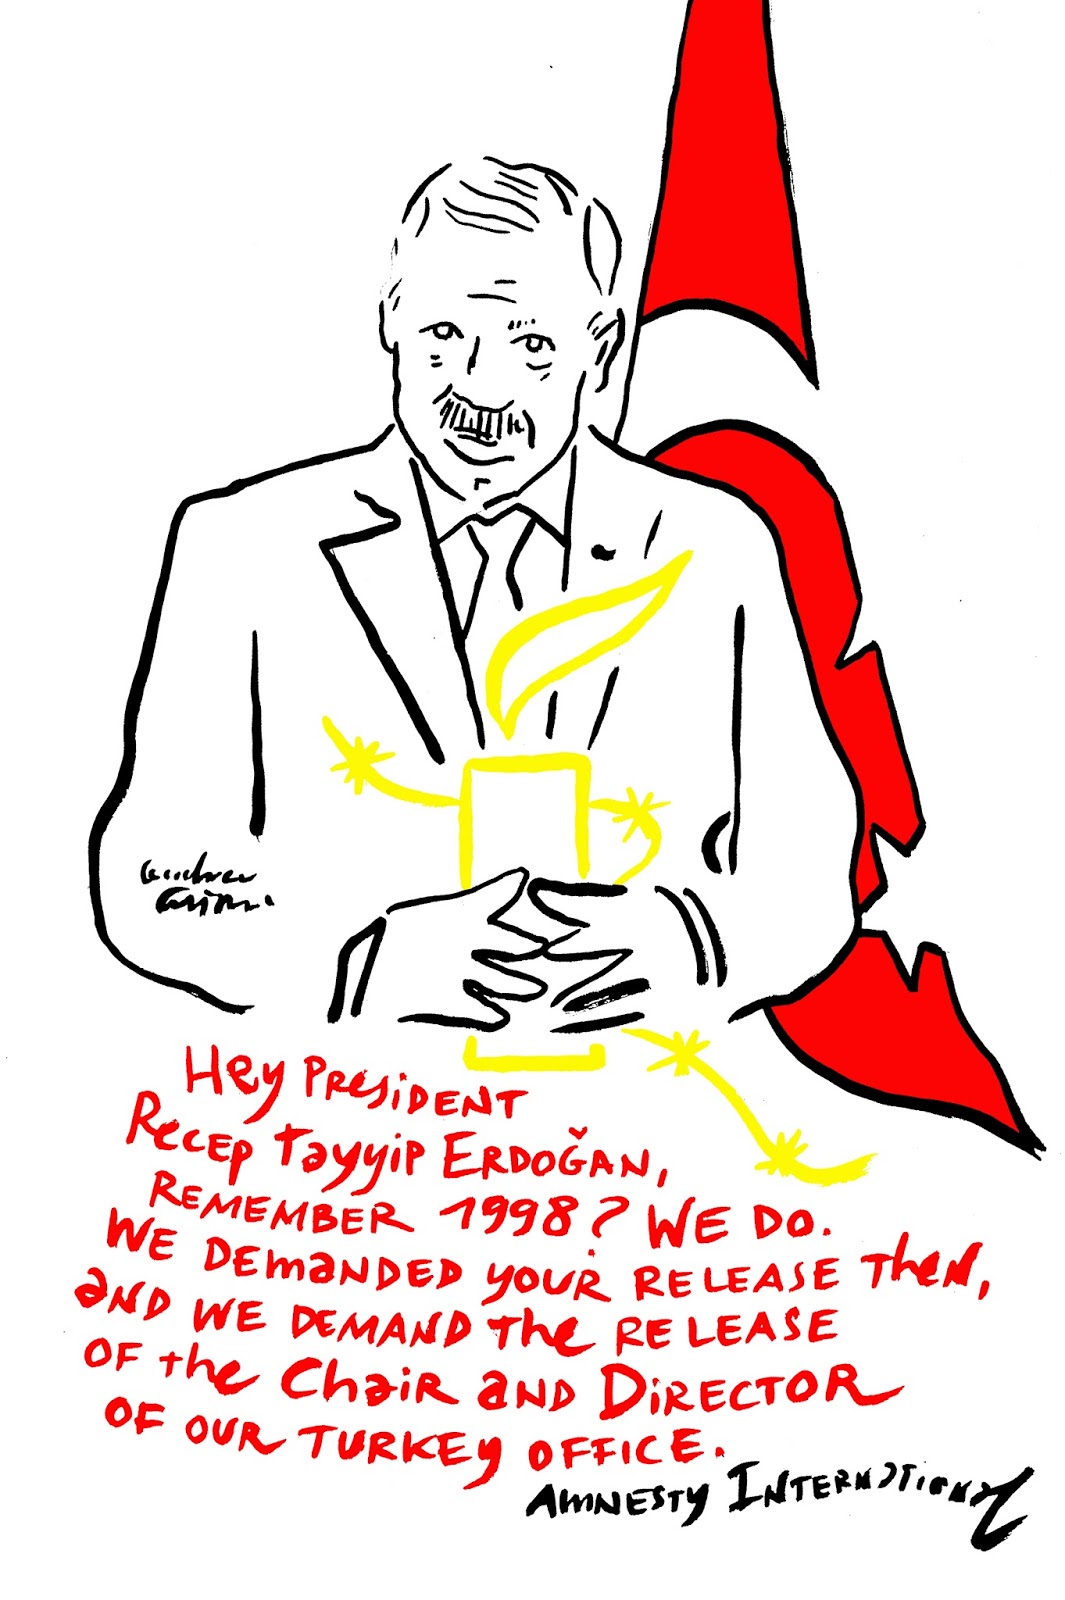 Channeldraw: Hey President Recep Tayyip Erdoğan, remember 